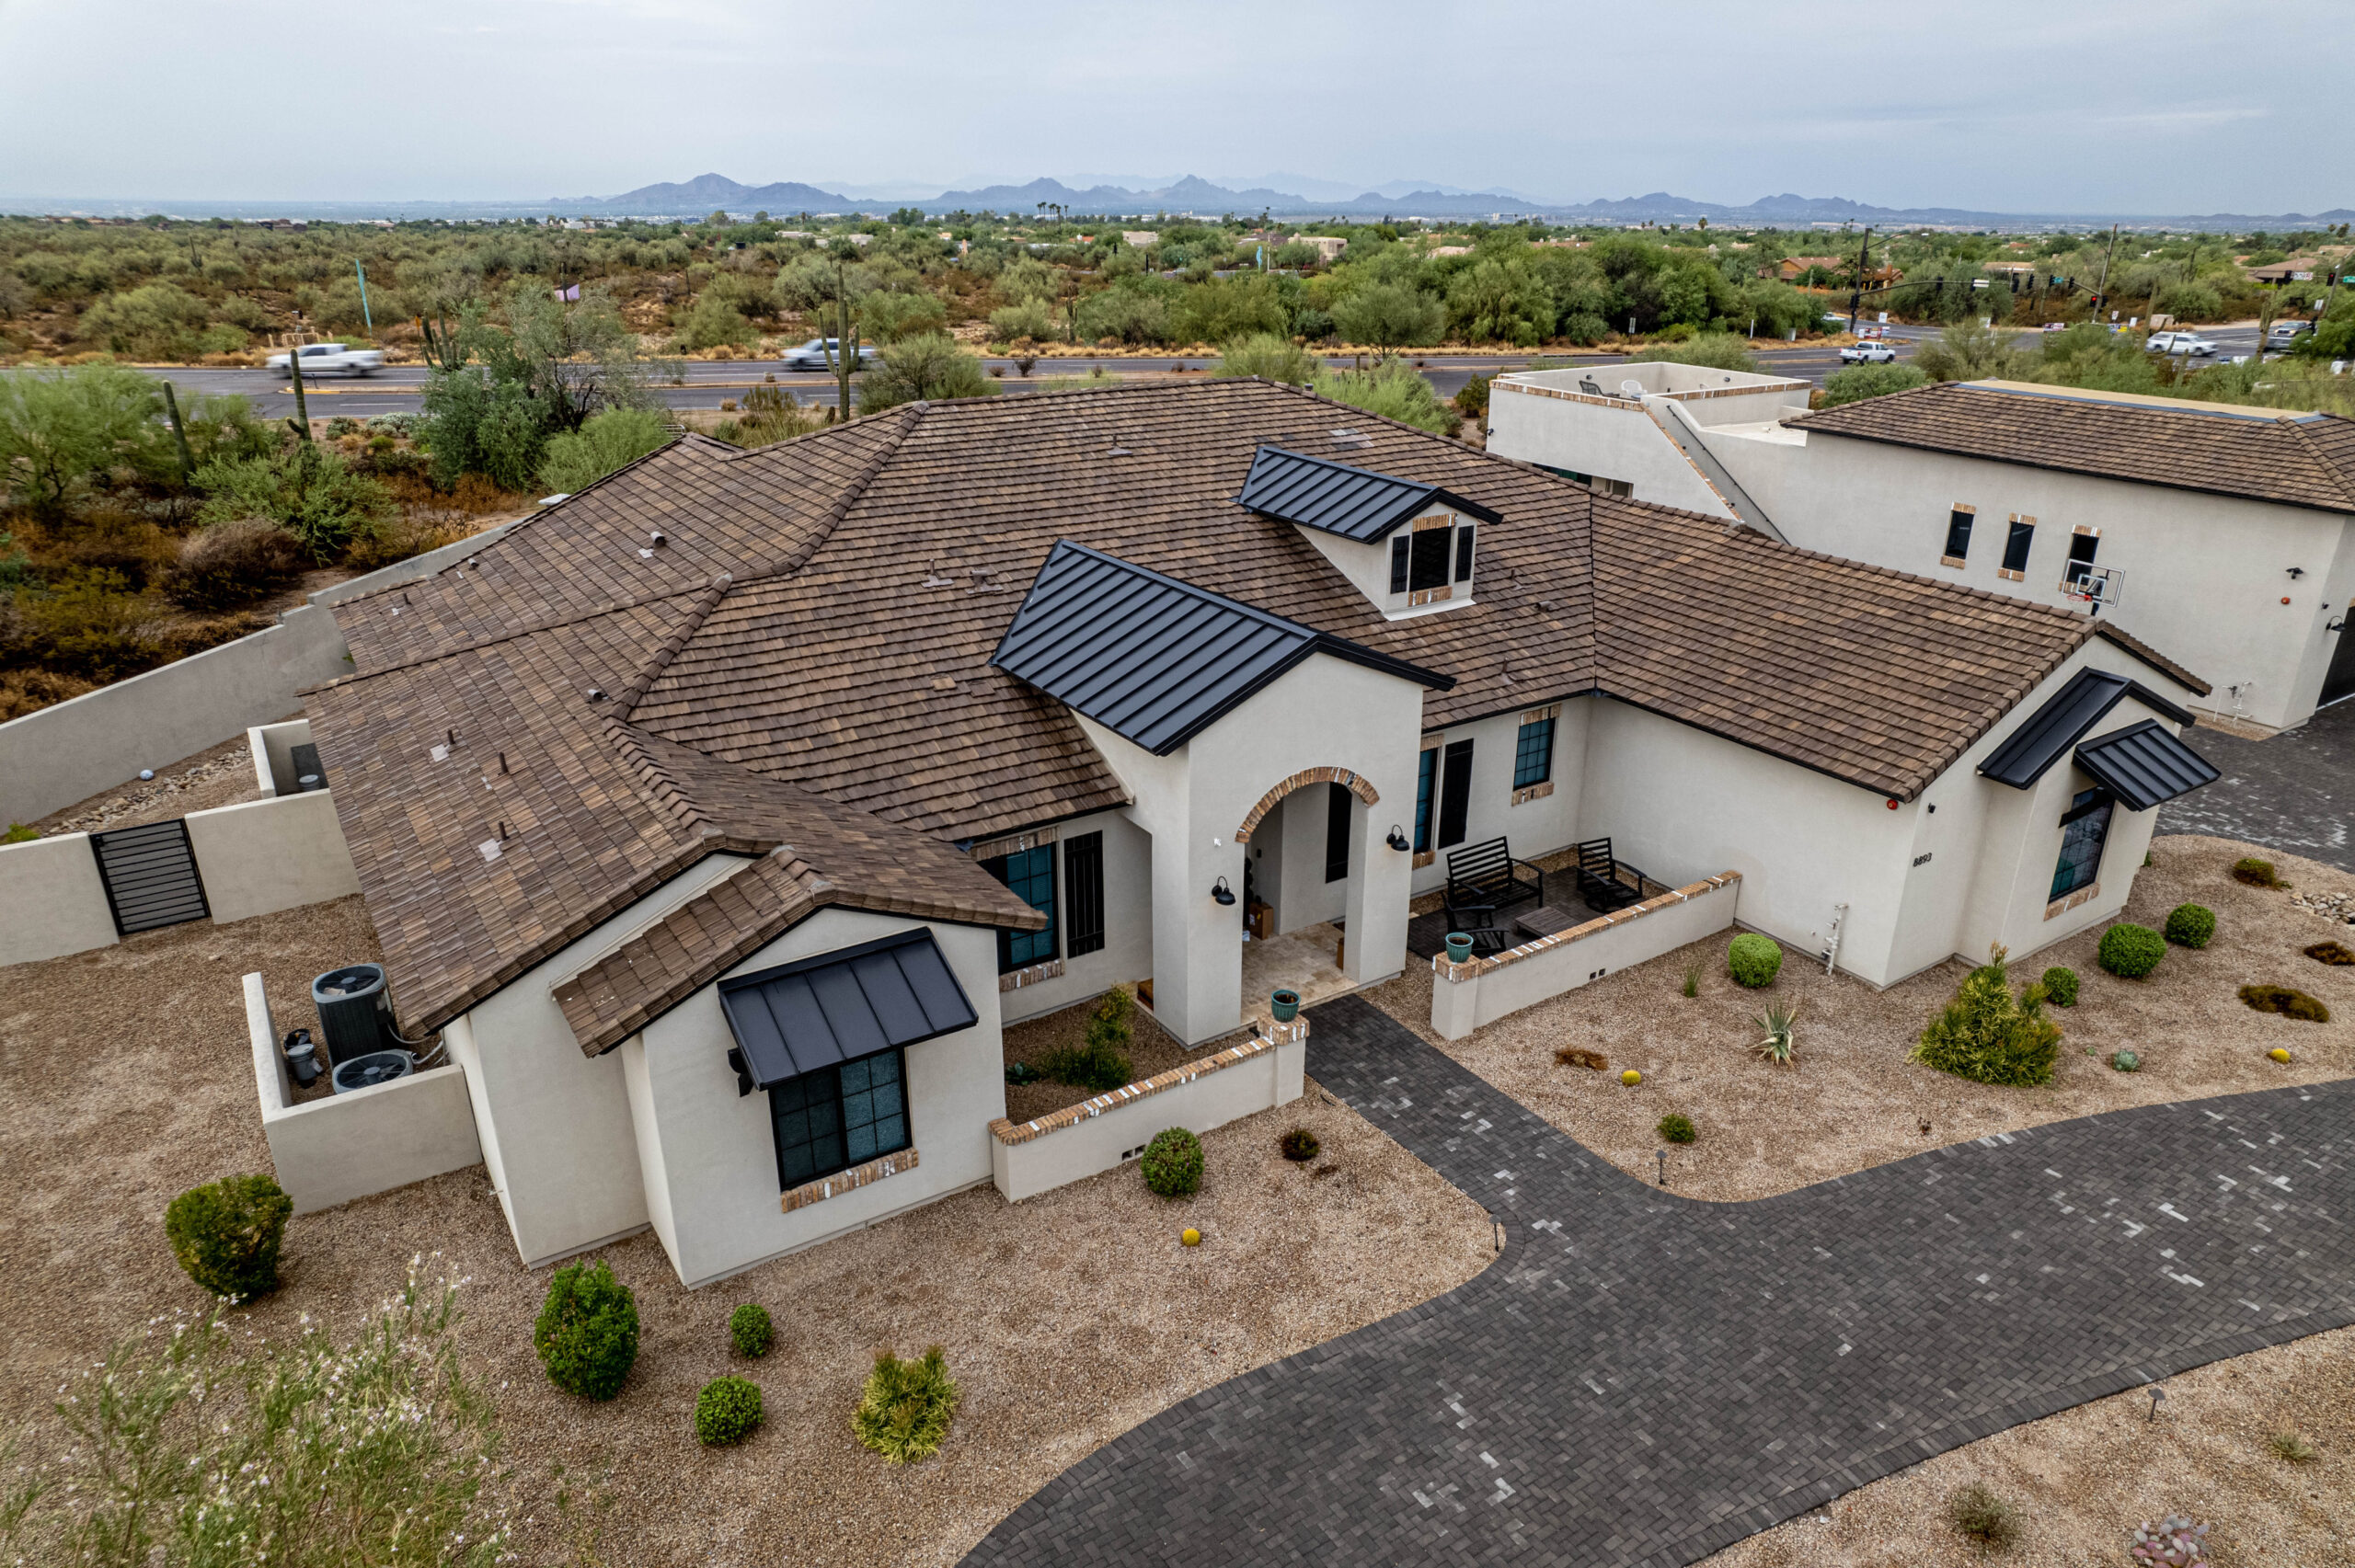 Bird's-eye view of a newly tiled residence in Grayhawk, Arizona.